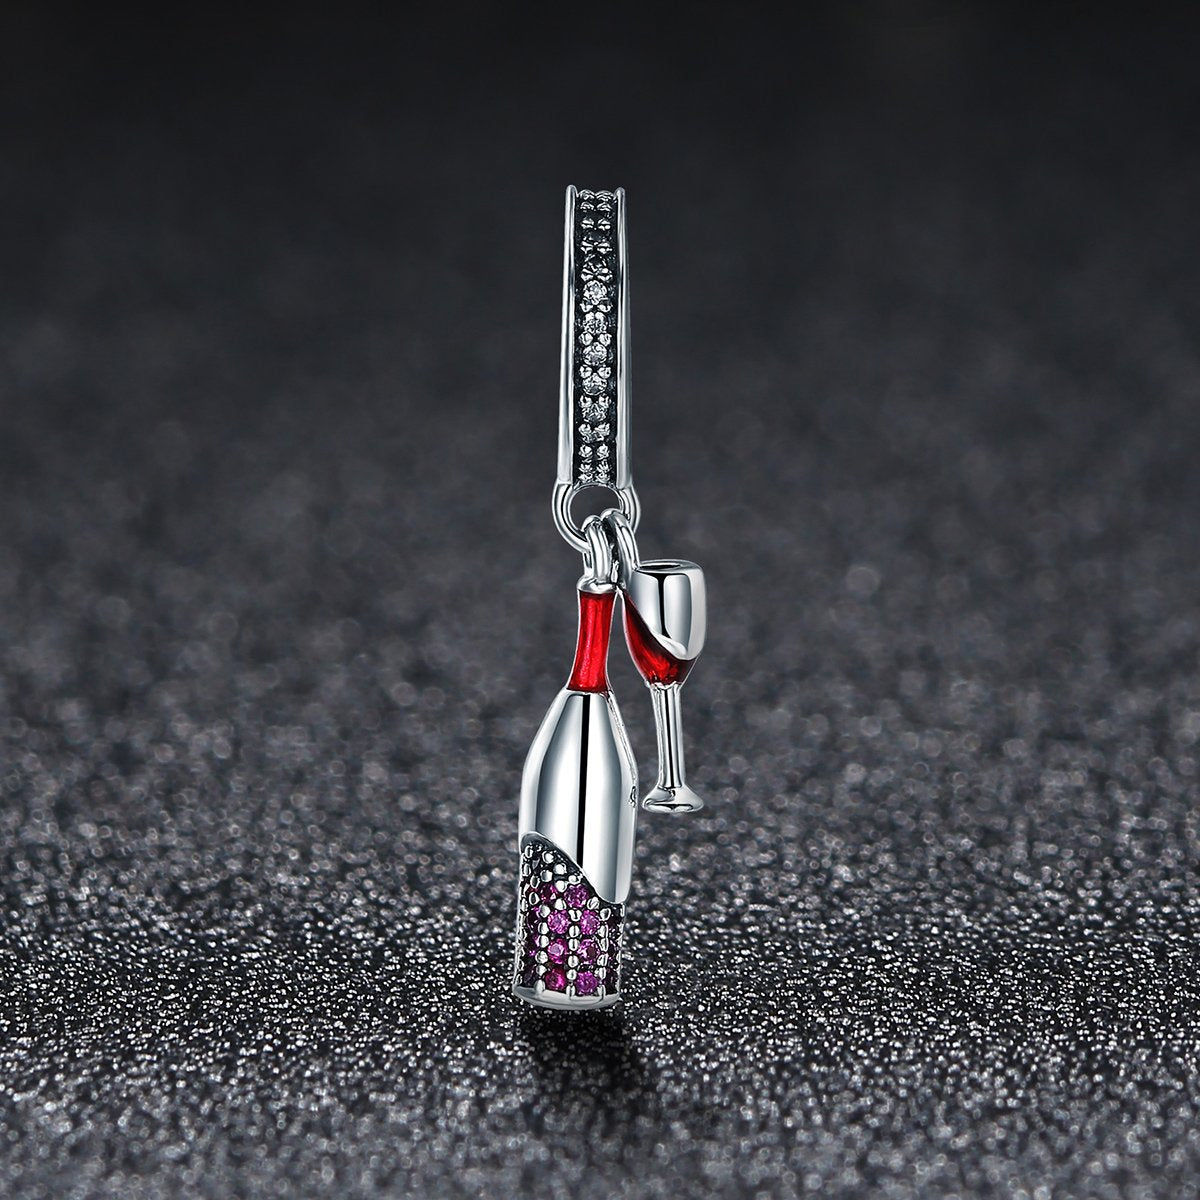 Sterling 925 silver charm the drink wine bead pendant fits Pandora charm and European charm bracelet Xaxe.com